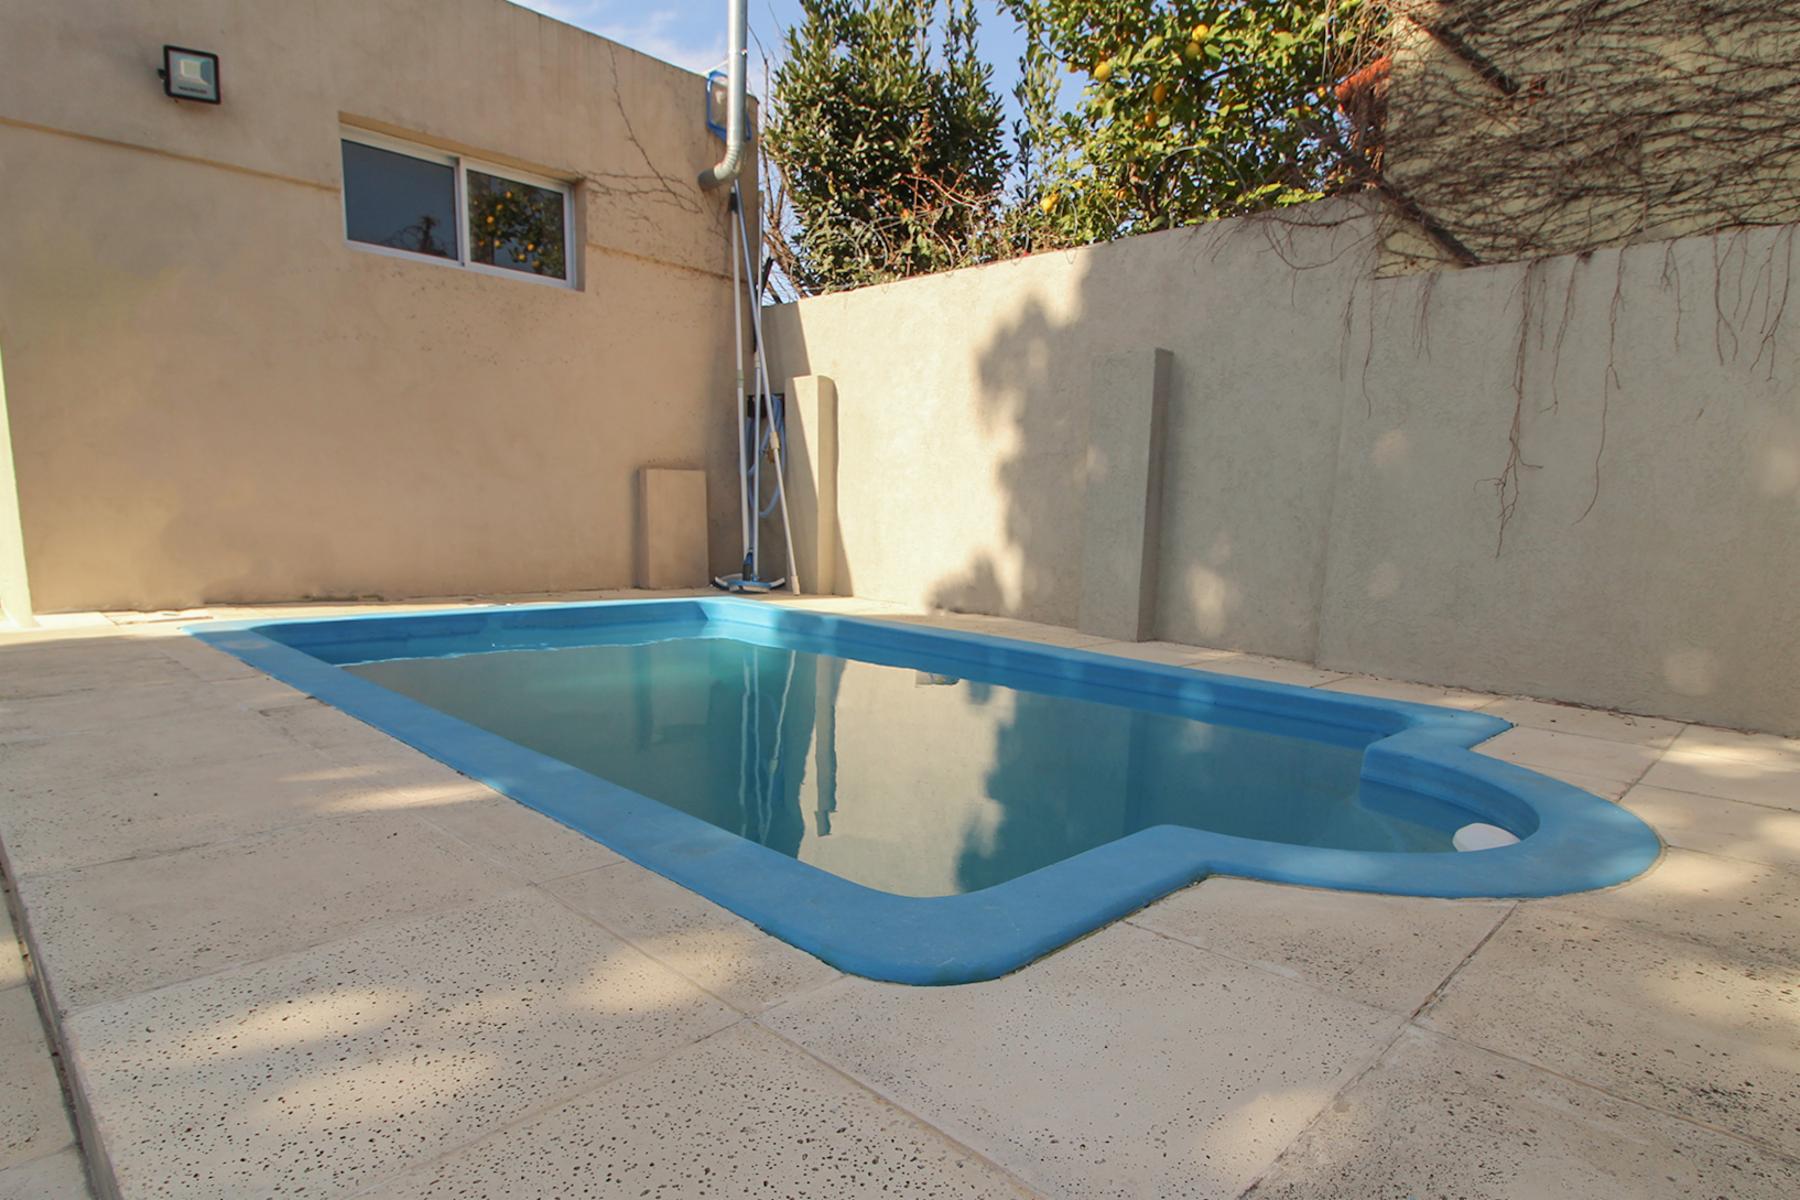 Casa en Venta con piscina en Ituzaing�